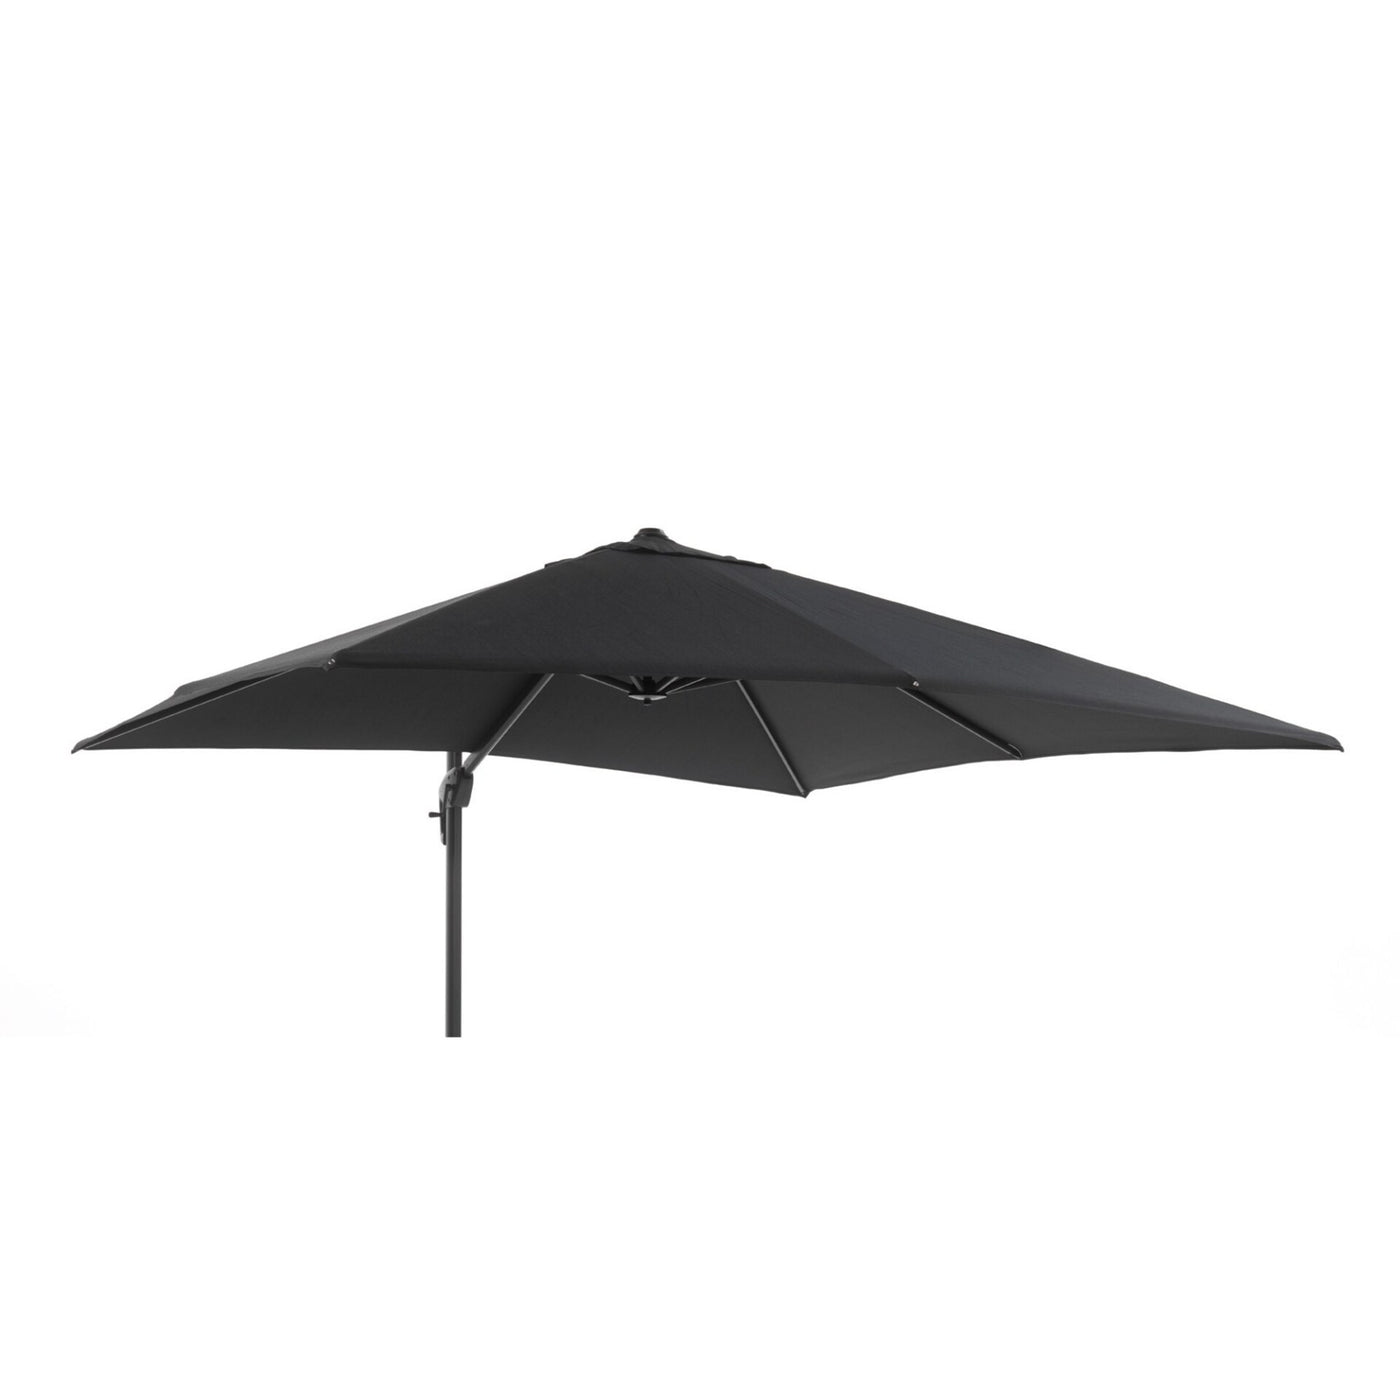 Dallas Umbrella Sun Resistant Stable System With Slide Handle 300cm x 300cm